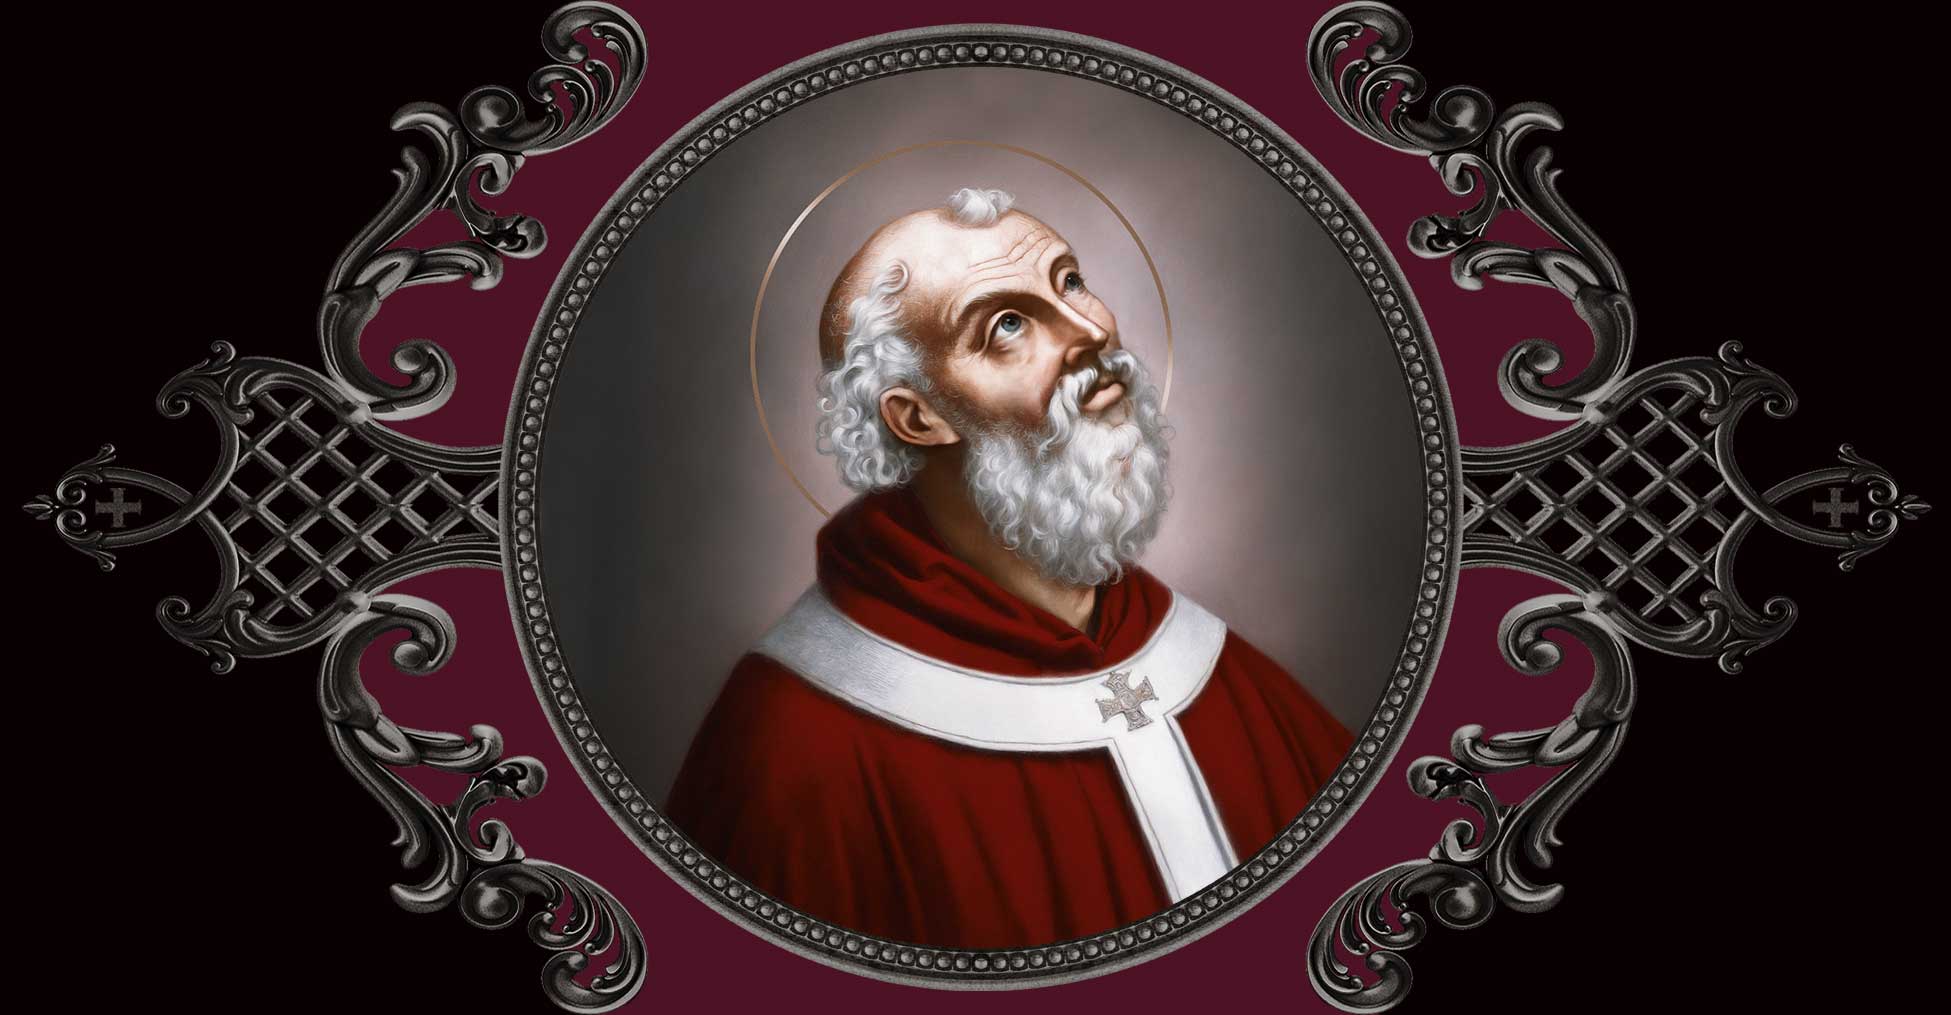 June 20 + Saint Pope Silverius - VENXARA®